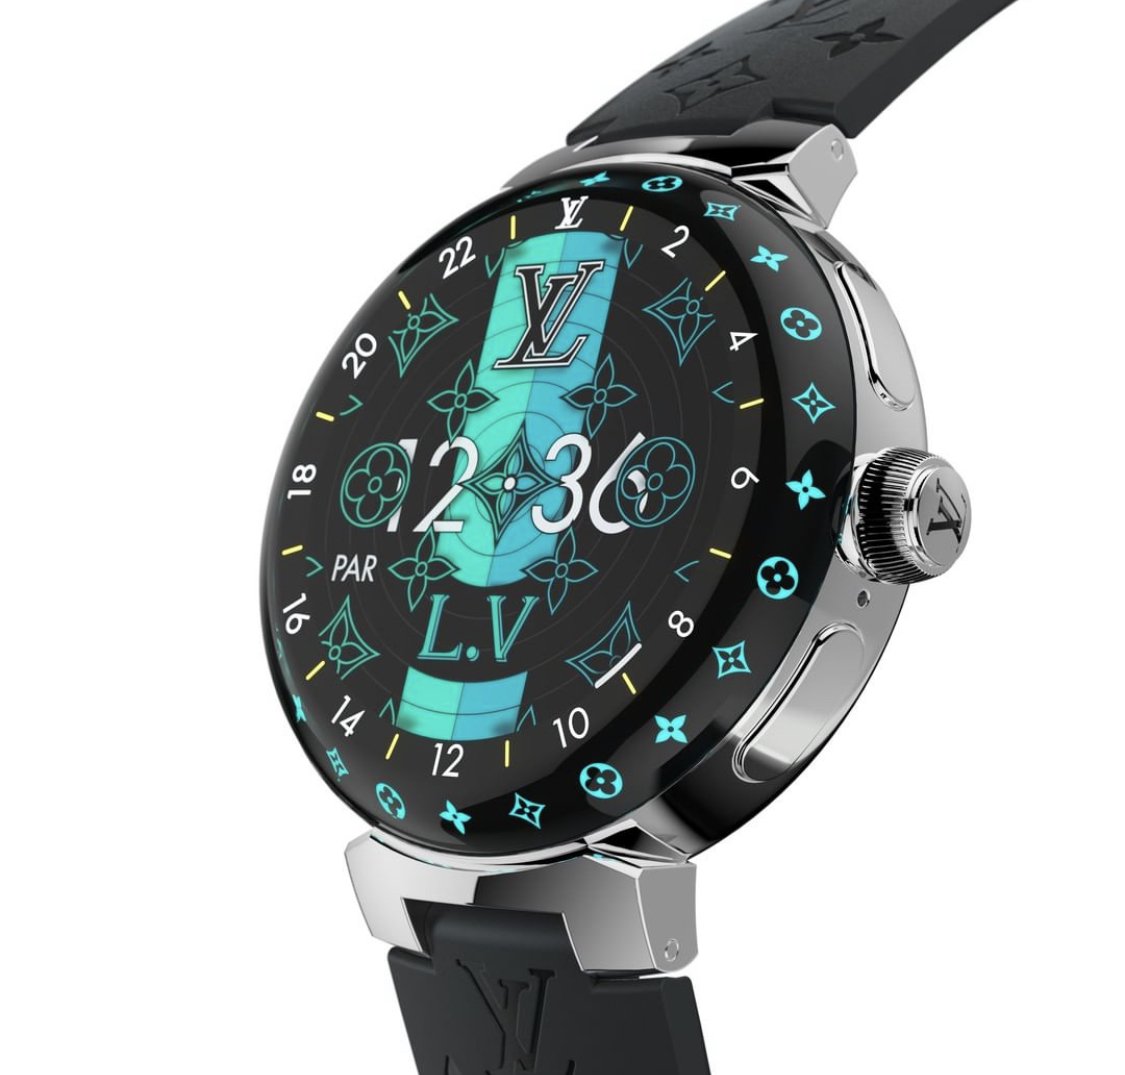 Take Three: The Louis Vuitton Tambour Horizon Light Up Smartwatch